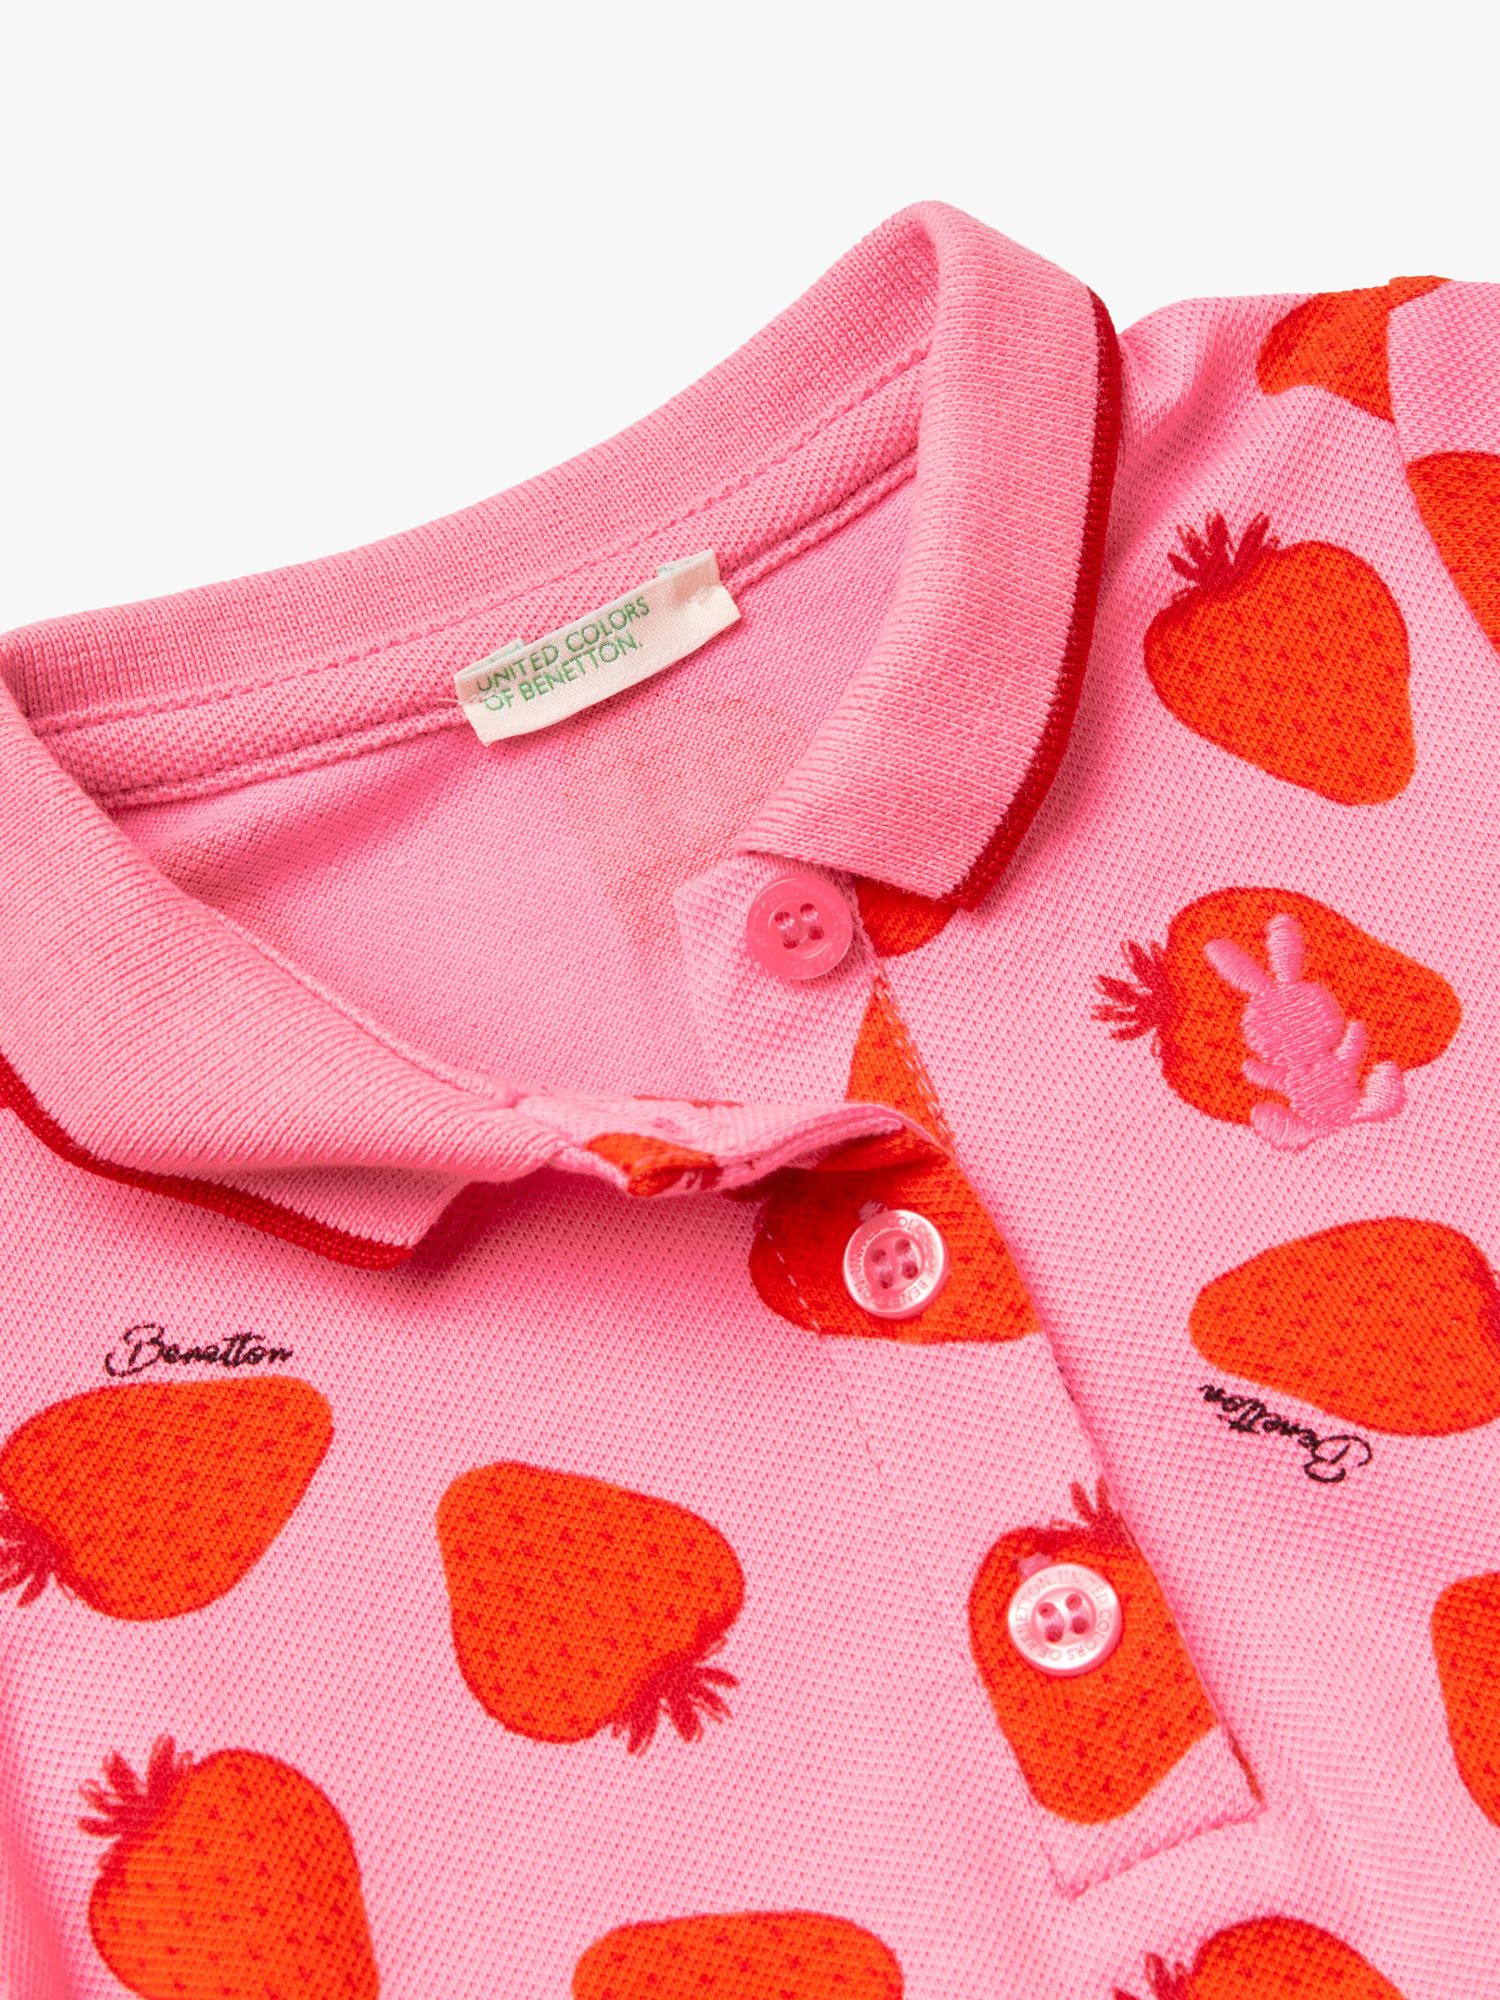 Benetton Baby Strawberry Print Dress, Pink/Multi, 0-3 months